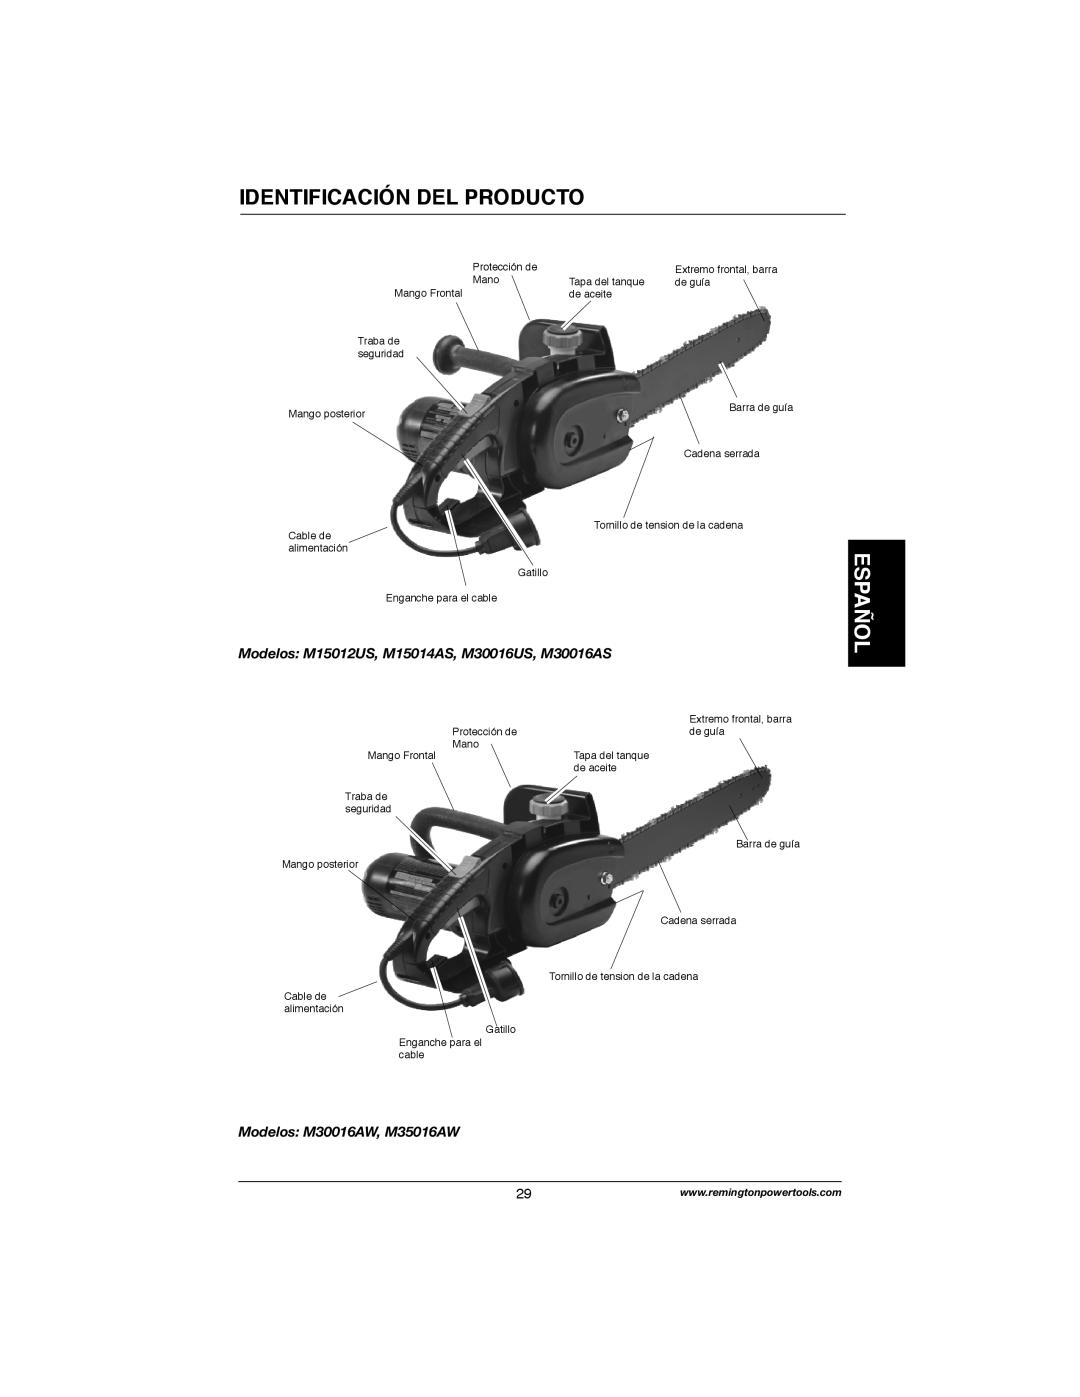 Remington Power Tools M30016AW Identificación Del Producto, Español, Modelos M15012US, M15014AS, M30016US, M30016AS 